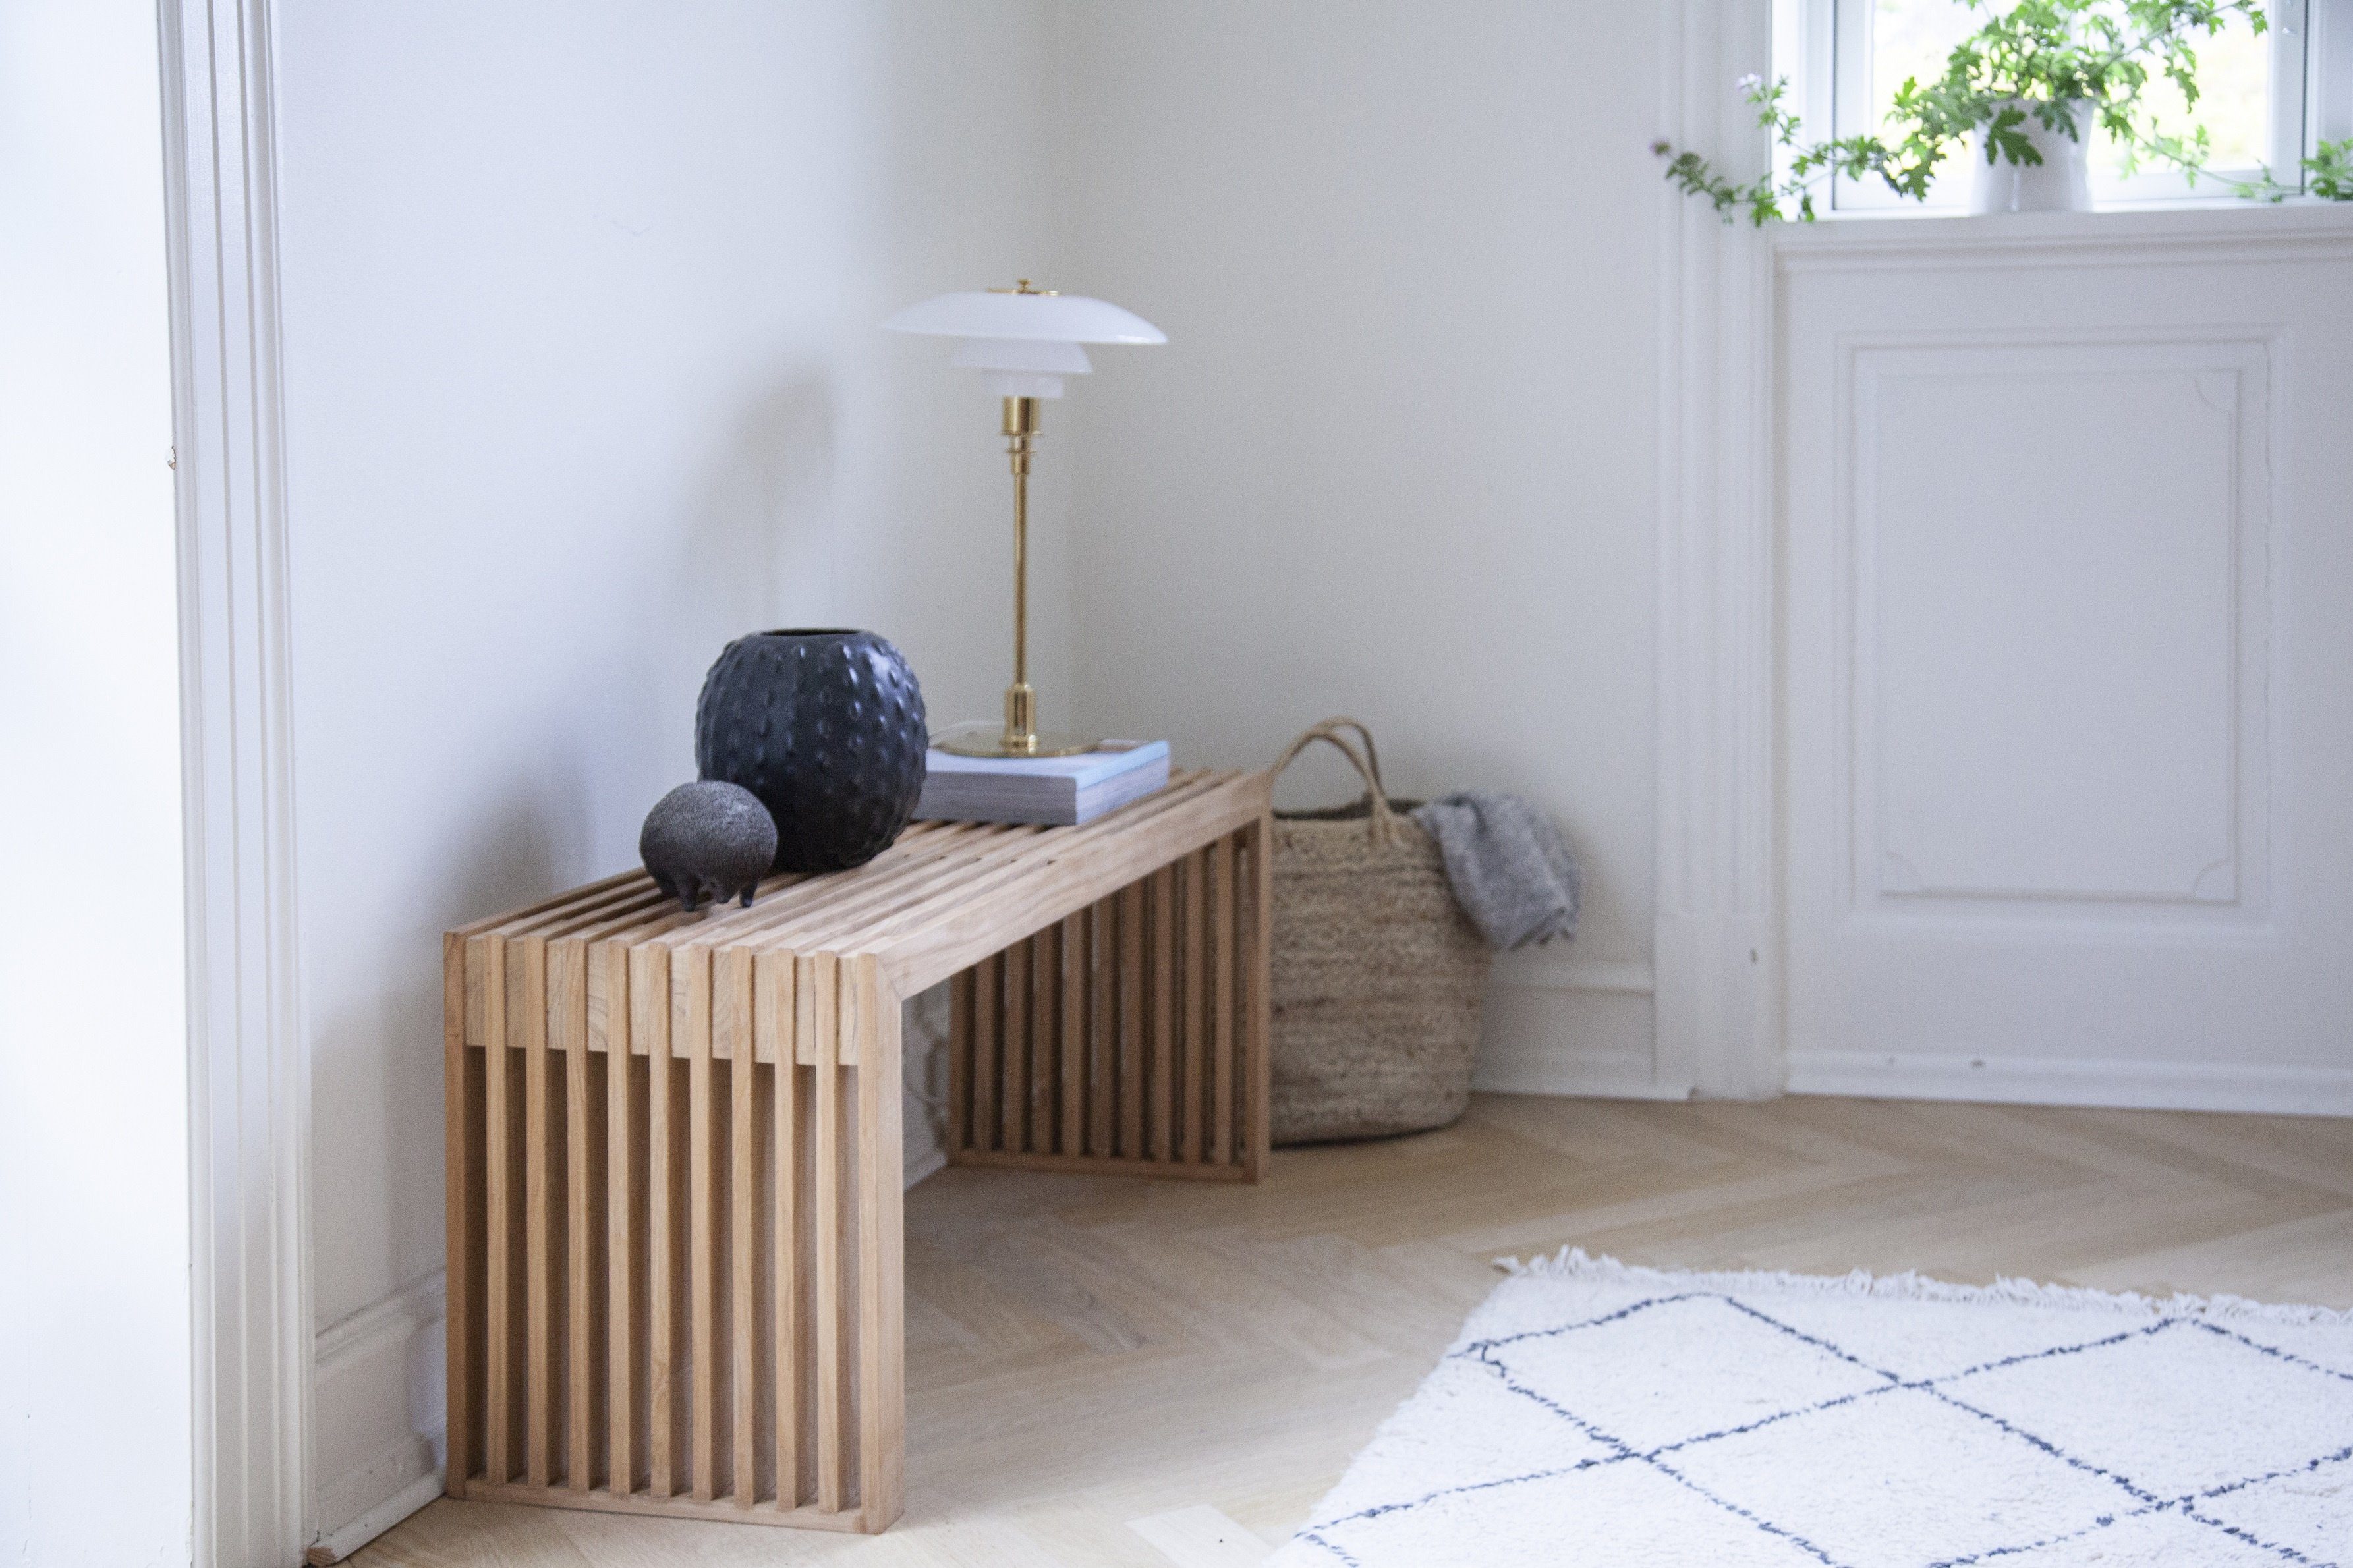 Sitzbank skandinavisches bambus Design Rib, Sustainable, Cinas neutral